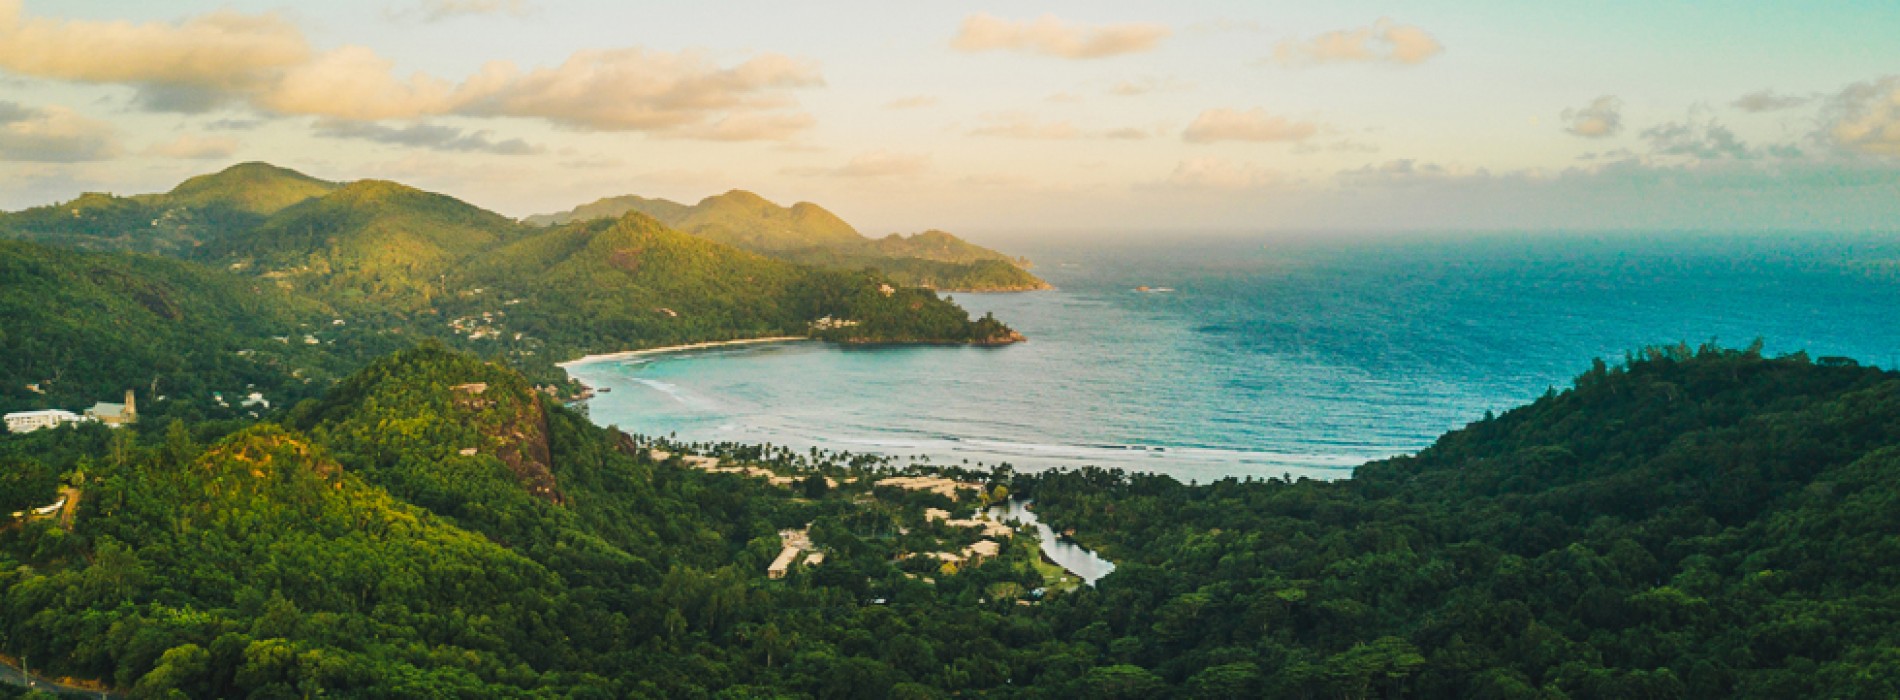 Kempinski Seychelles Resort recognized by Luxury Travel Guide for eco-friendly efforts